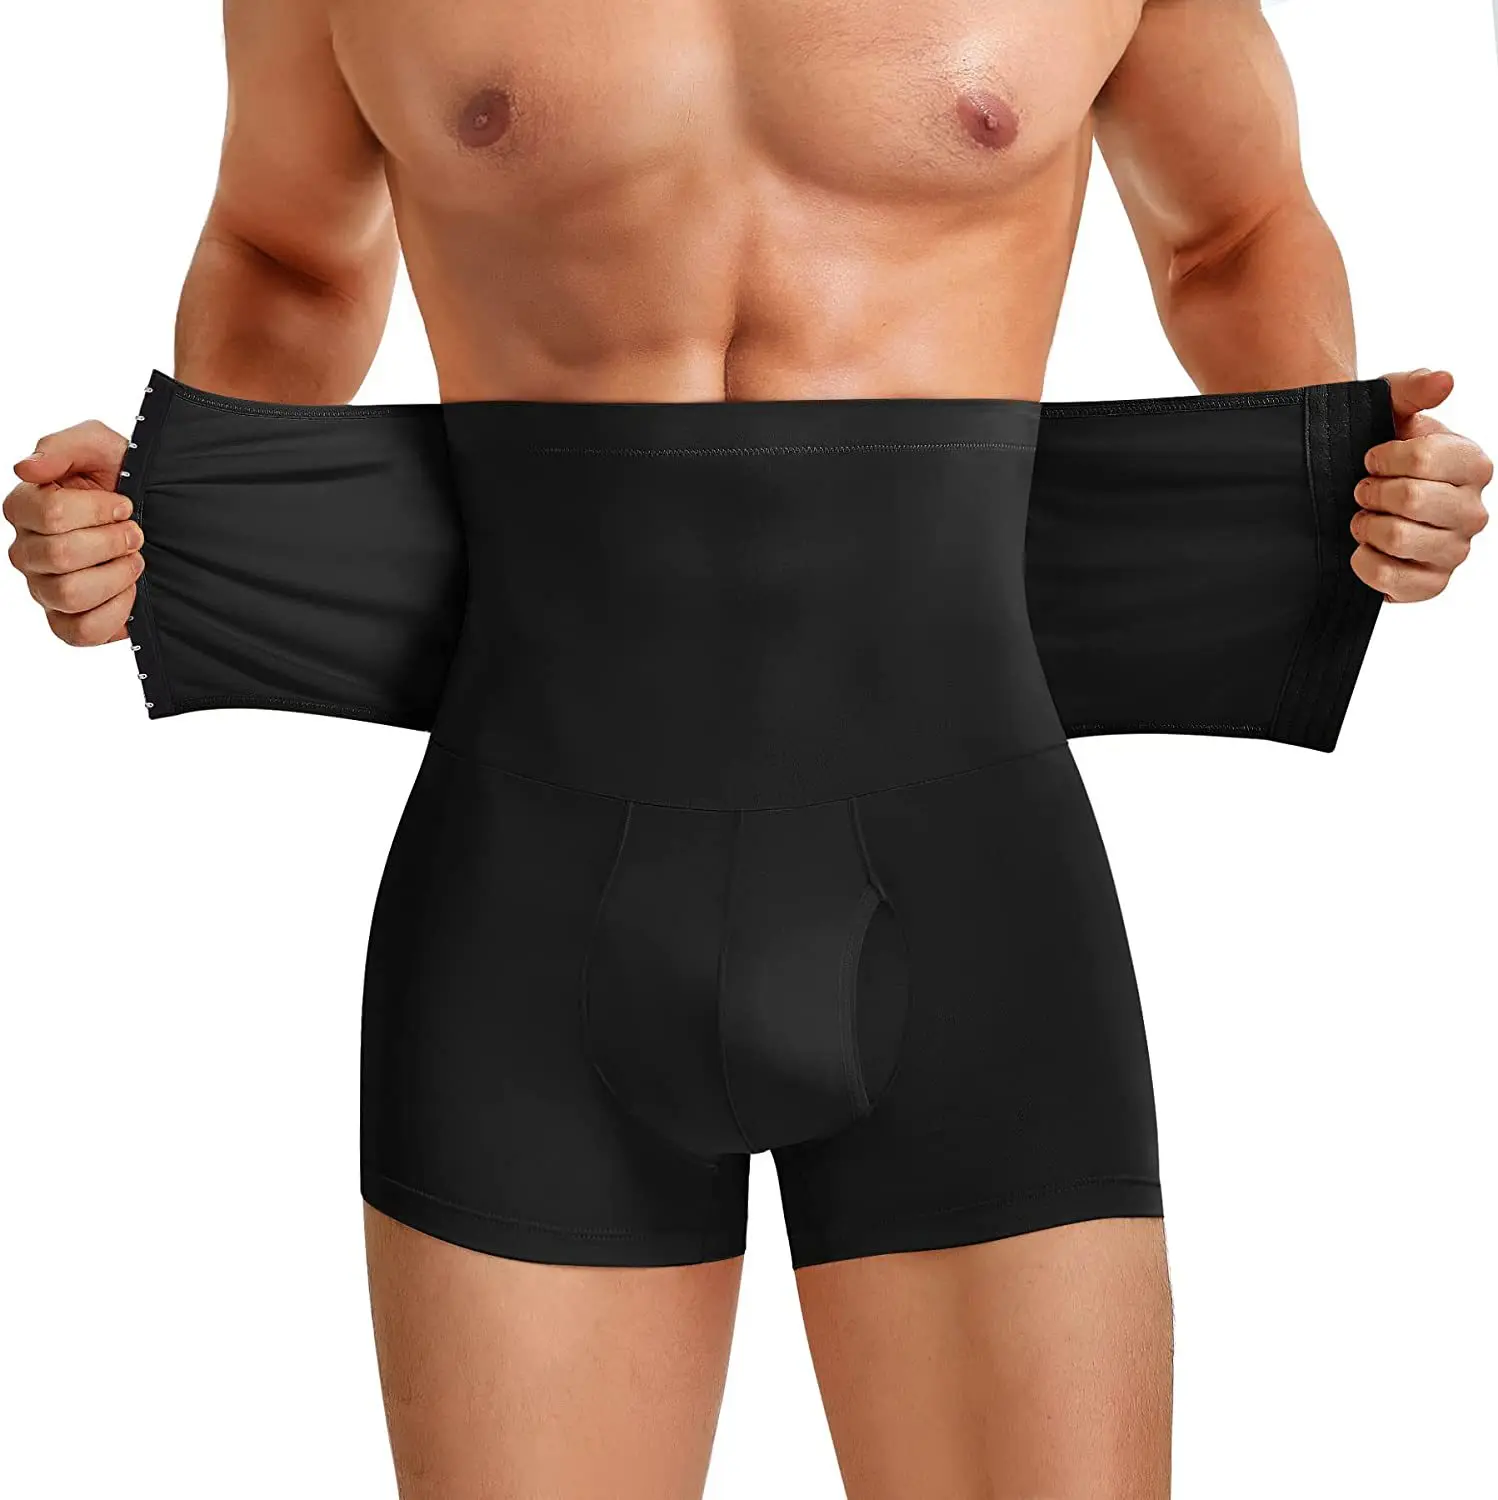 Mens Tummy Control Shorts: Push Up, Hip Enhancement, Slimming Underwear For  Workout And Beach From Littlebirdofficialst, $19.96